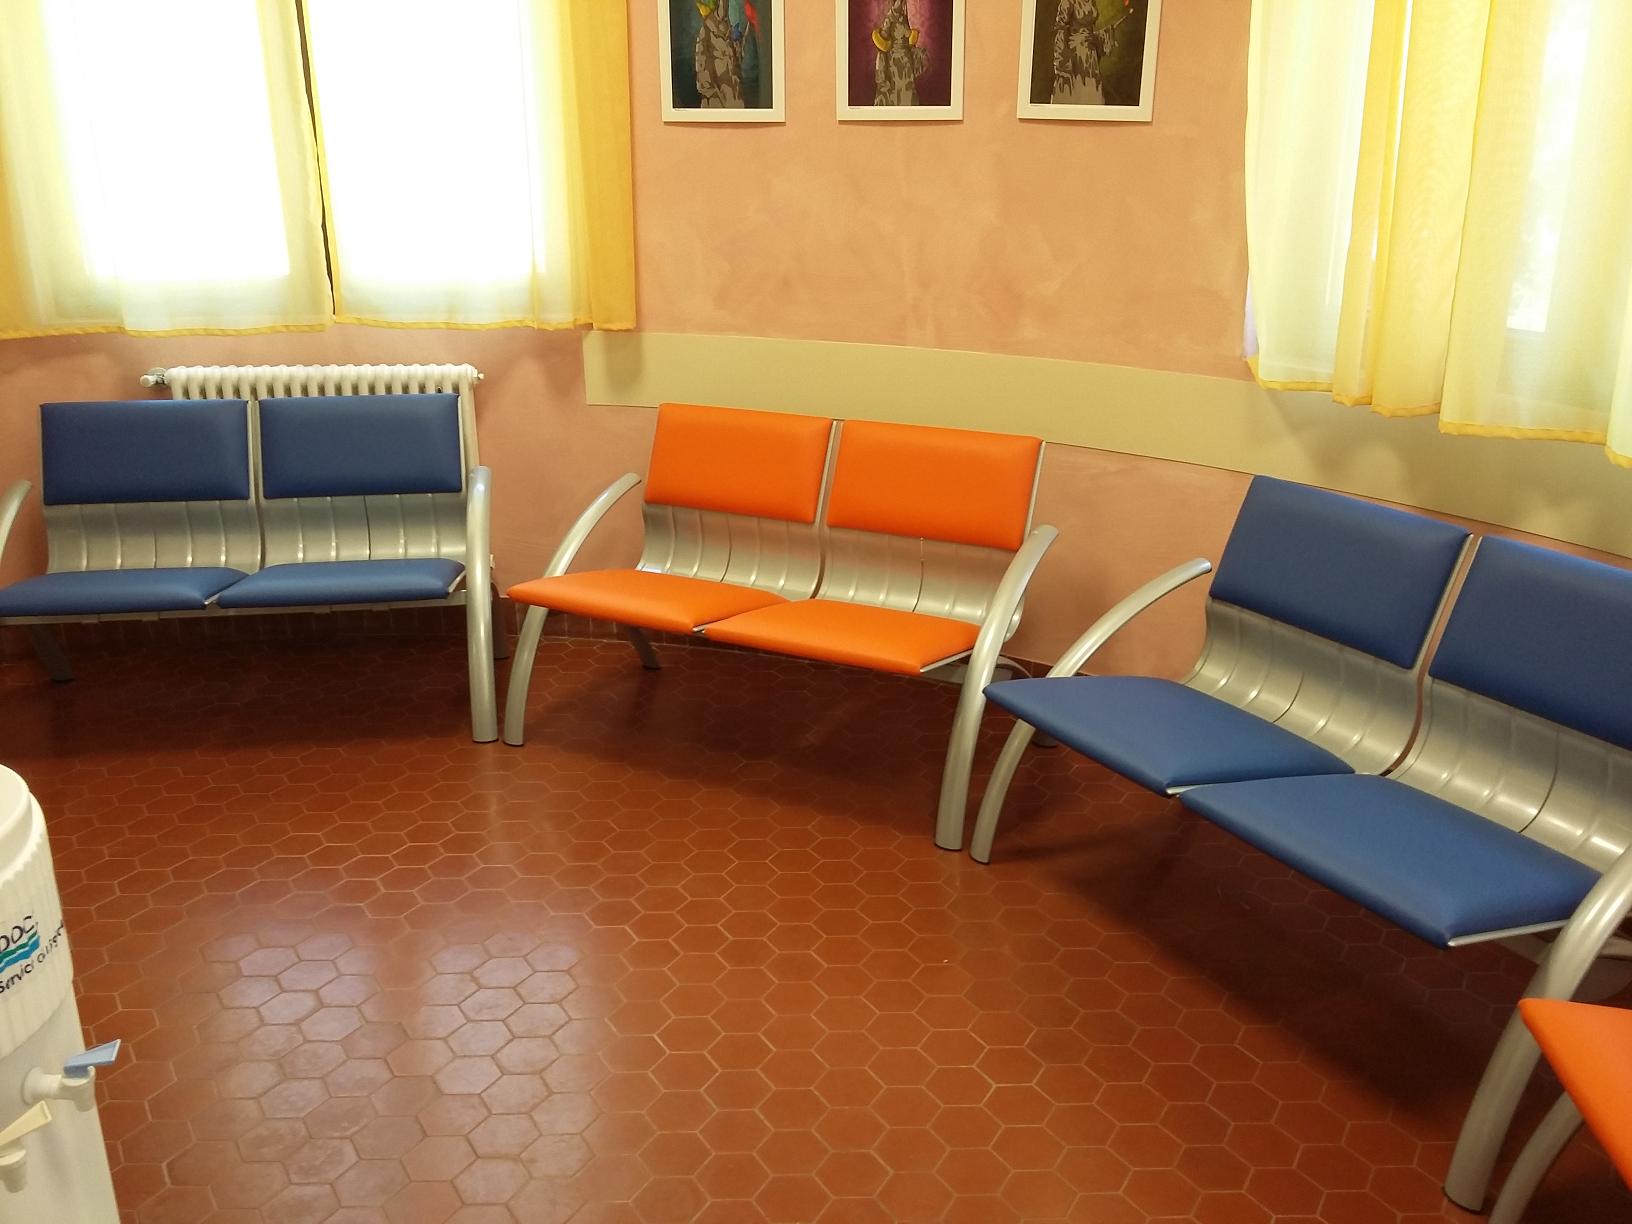 Waiting room at IOV Hospital - Padua